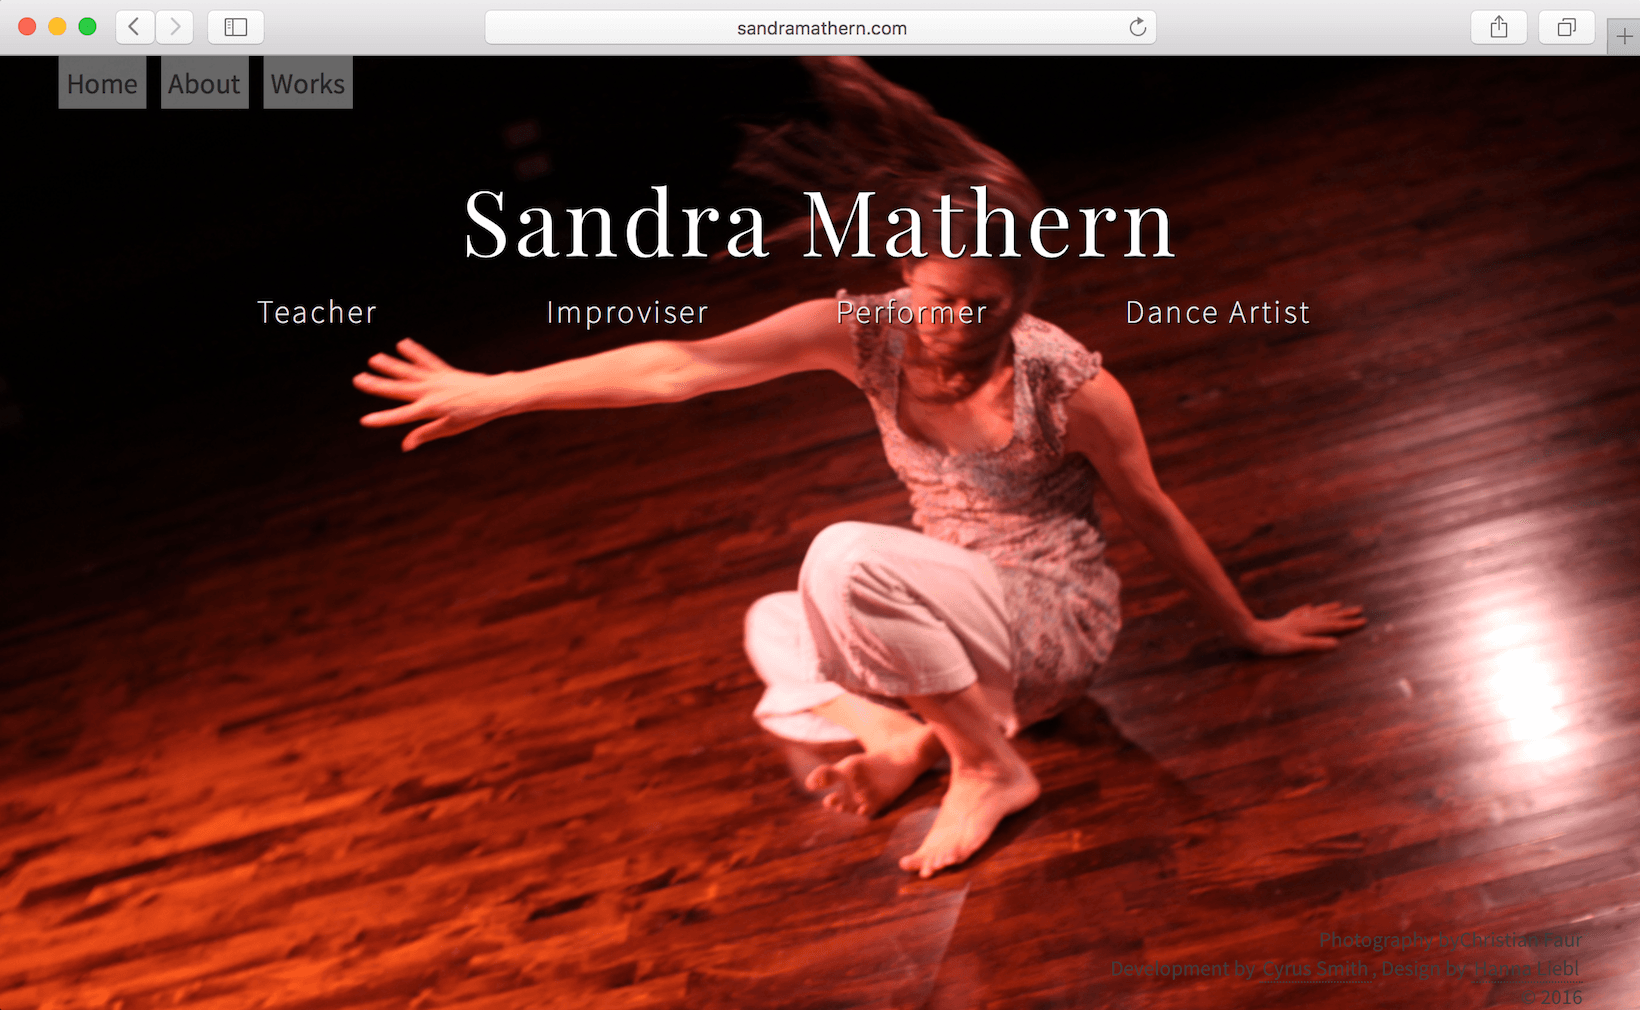 Sandra Mathern's portfolio, featuring photographs of her dance performances.